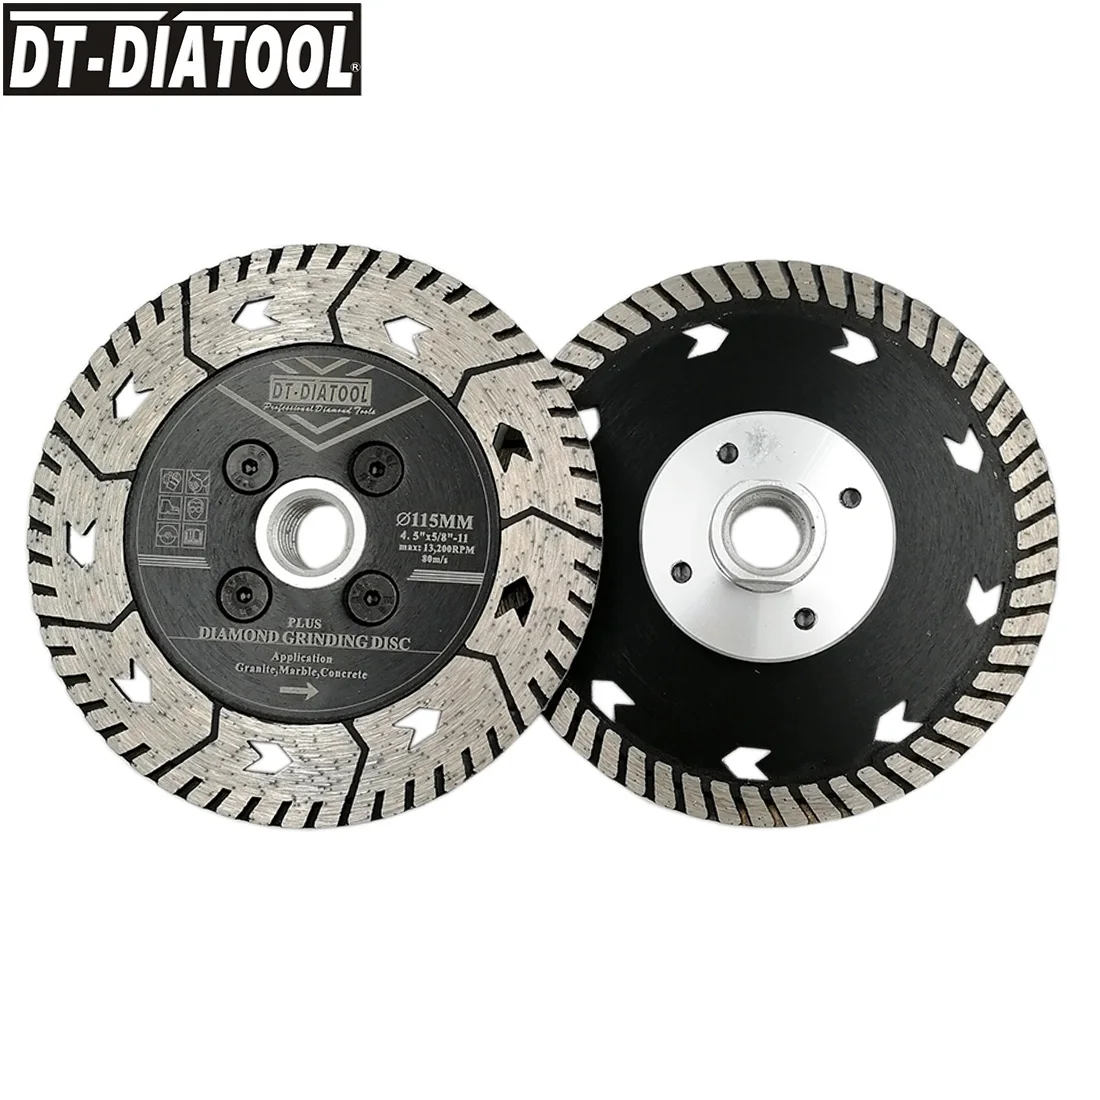 

DT-DIATOOL 2pcs 5/8-11 Thread Dia 115mm/4.5" Diamond Cutting Grindng Wheel Disc Dual Saw Blade Cut Grind Granite Marble Concrete